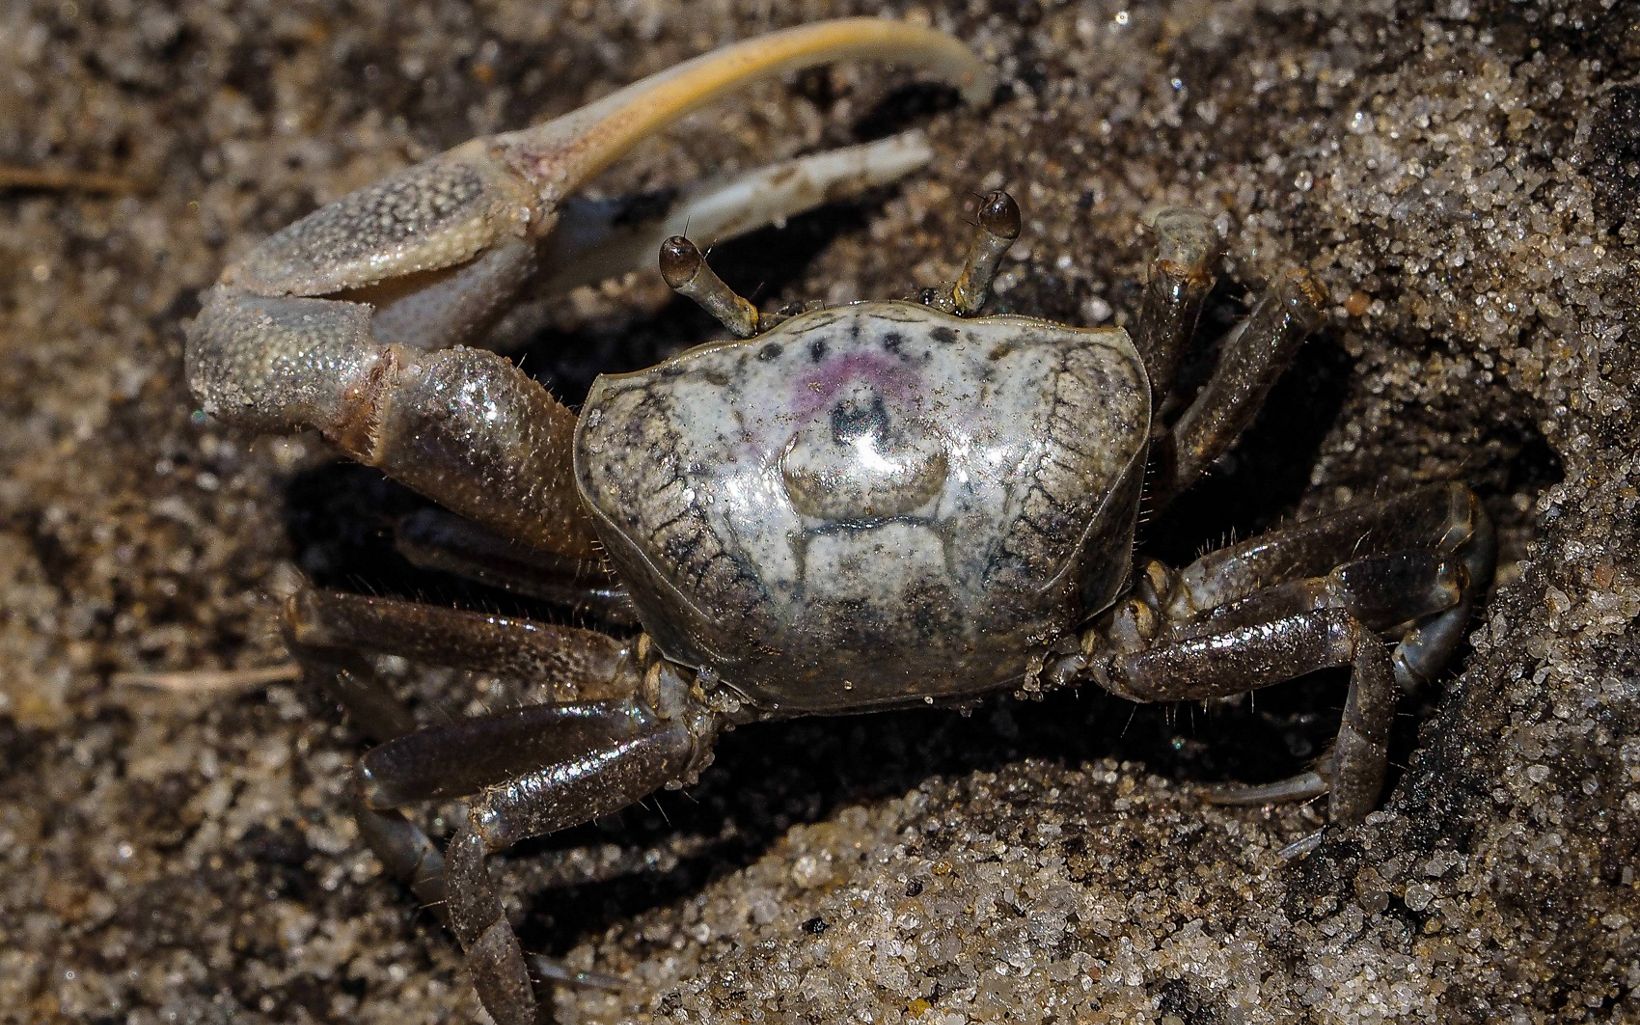 Closeup of a fiddler crab in sand.